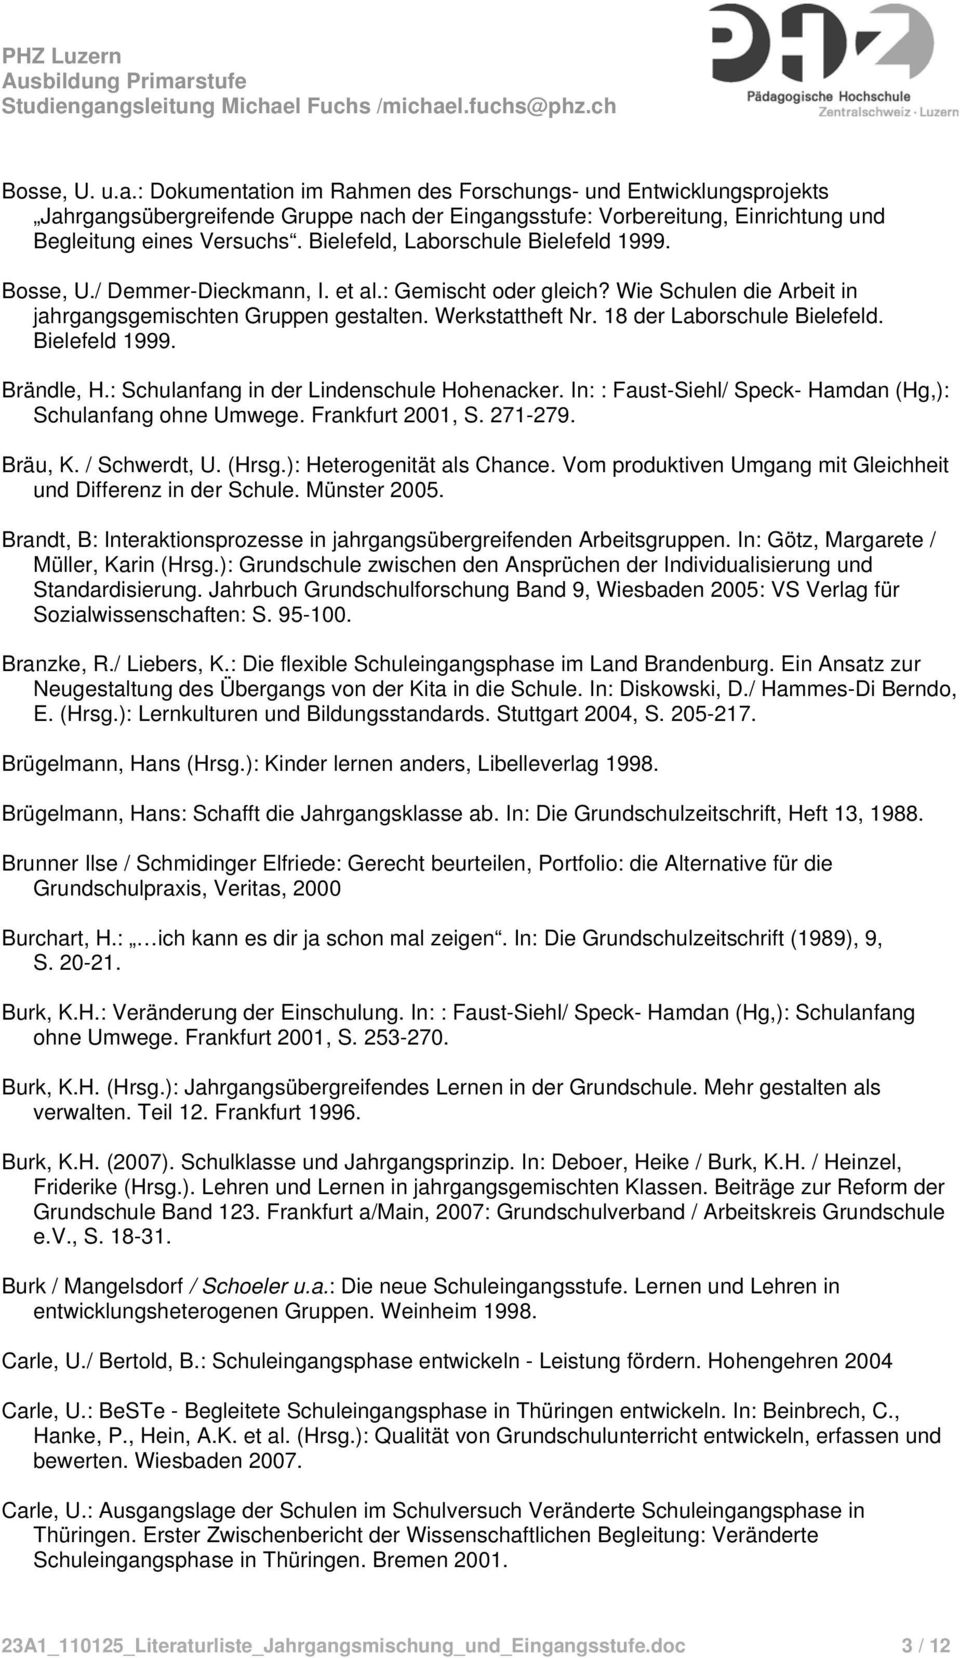 18 der Laborschule Bielefeld. Bielefeld 1999. Brändle, H.: Schulanfang in der Lindenschule Hohenacker. In: : Faust-Siehl/ Speck- Hamdan (Hg,): Schulanfang ohne Umwege. Frankfurt 2001, S. 271-279.